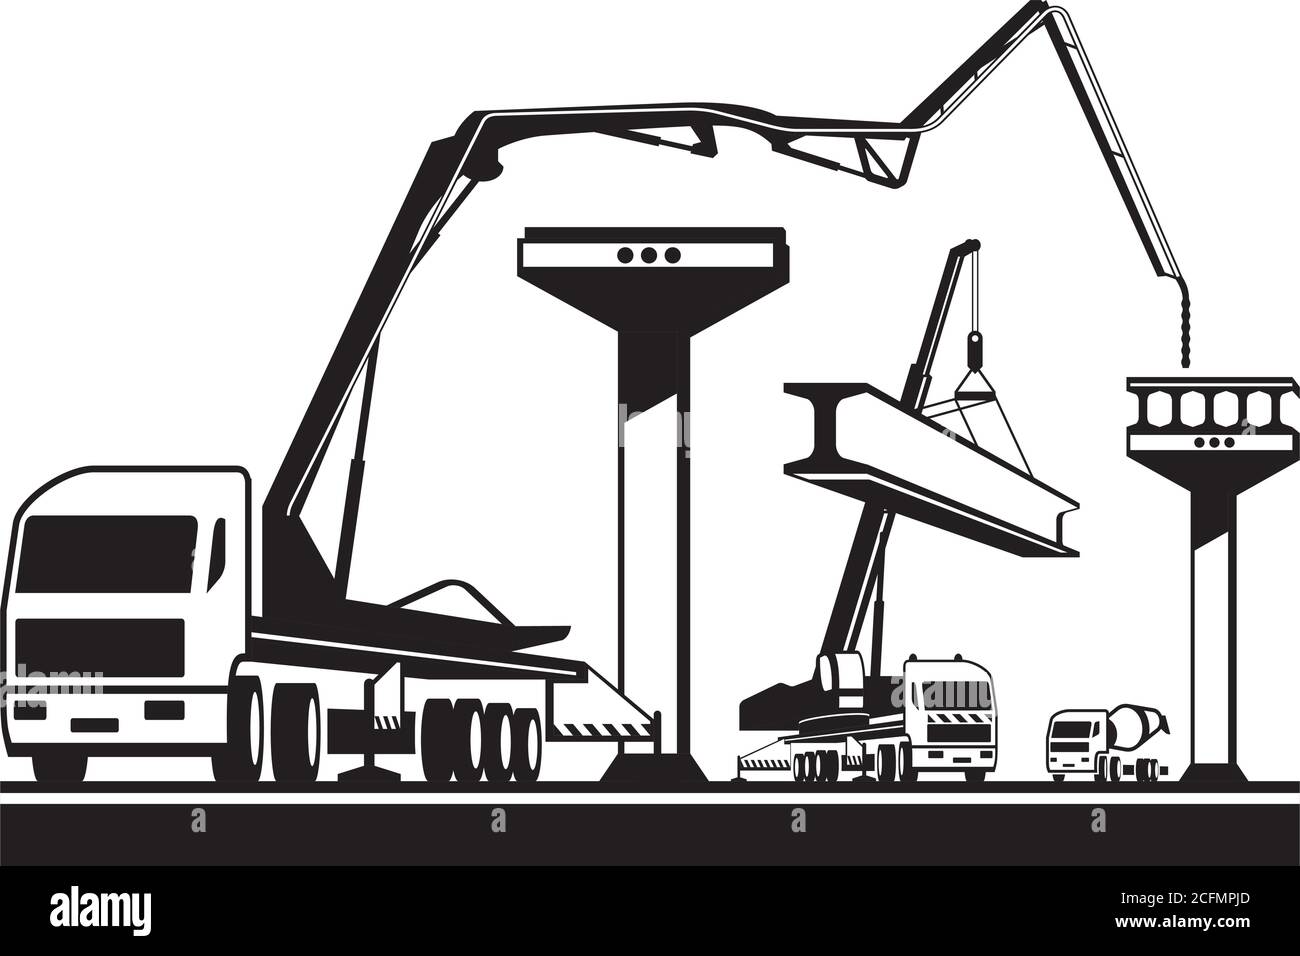 Construction machinery building a bridge – vector illustration Stock Vector